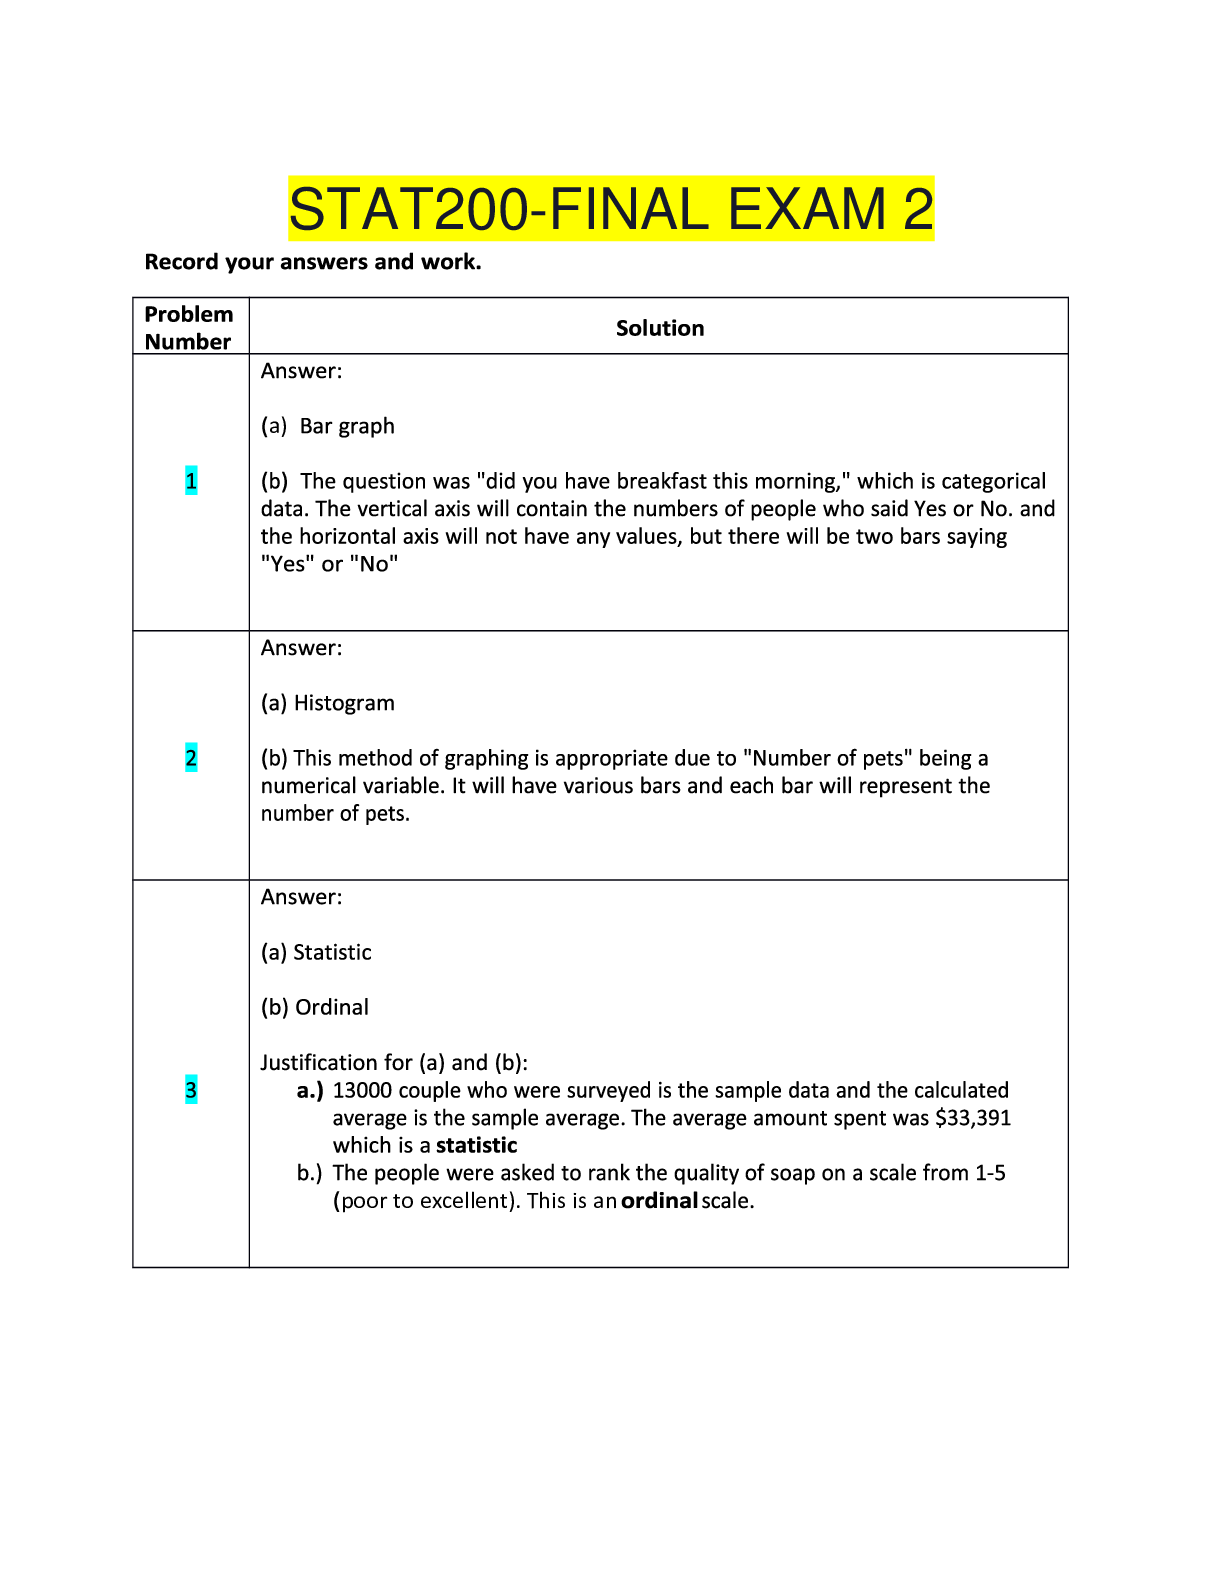 STAT 200 Final Examination